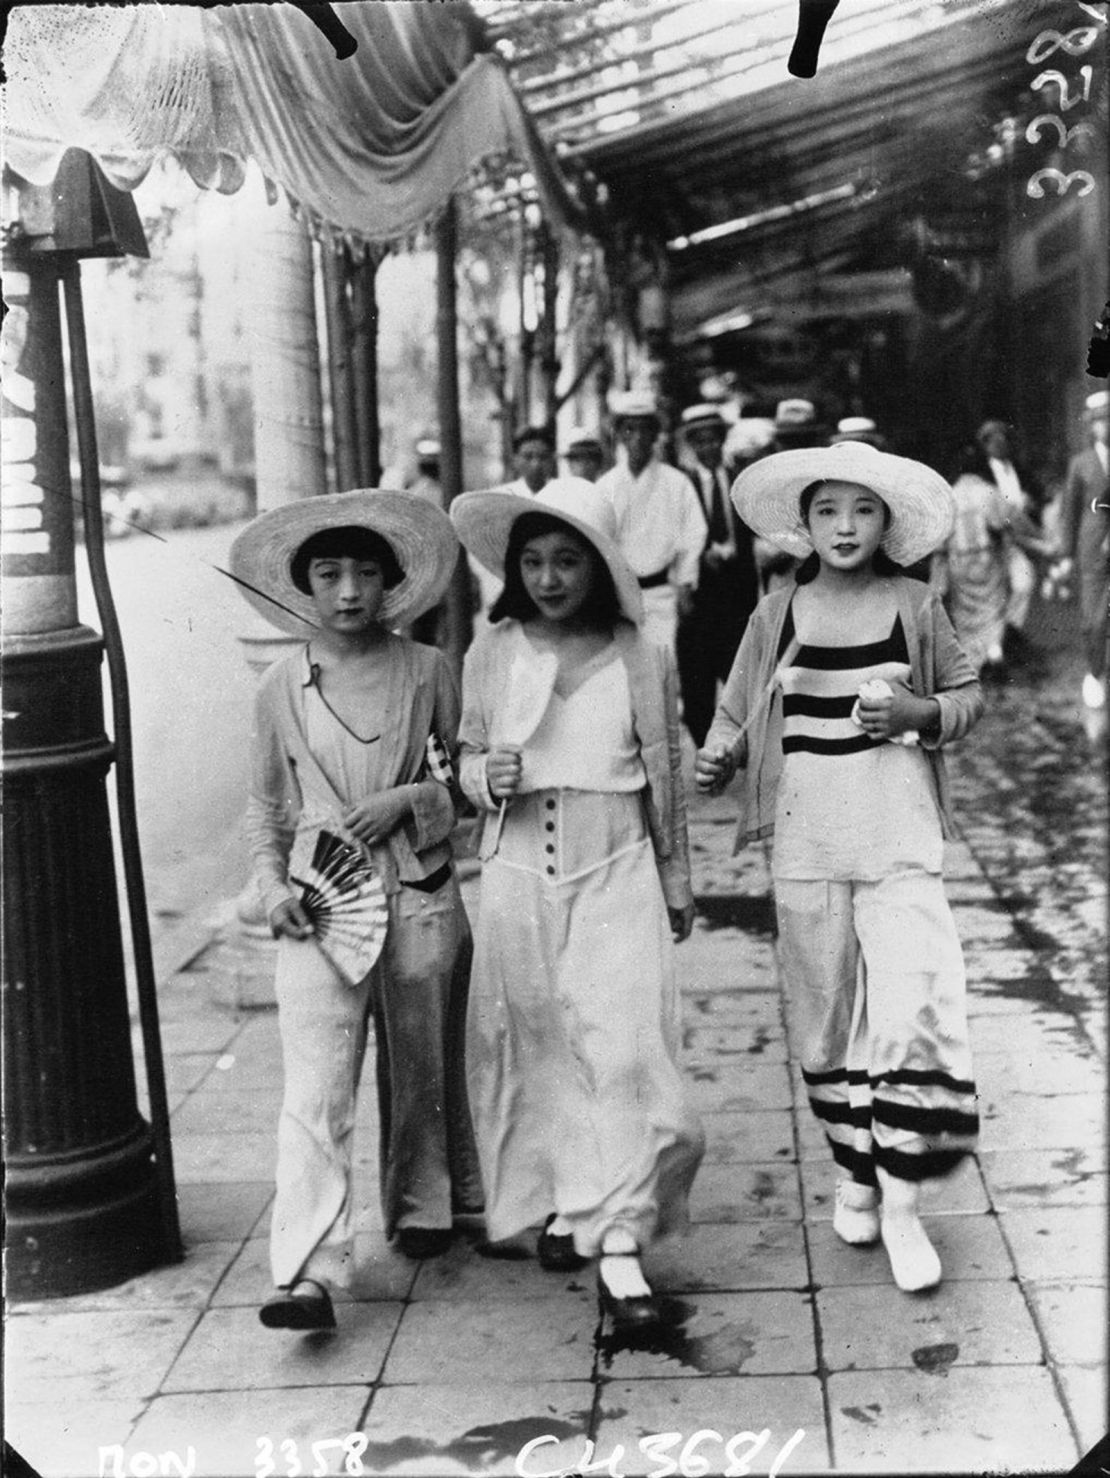 Moga walking on Tokyo streets in 1928.